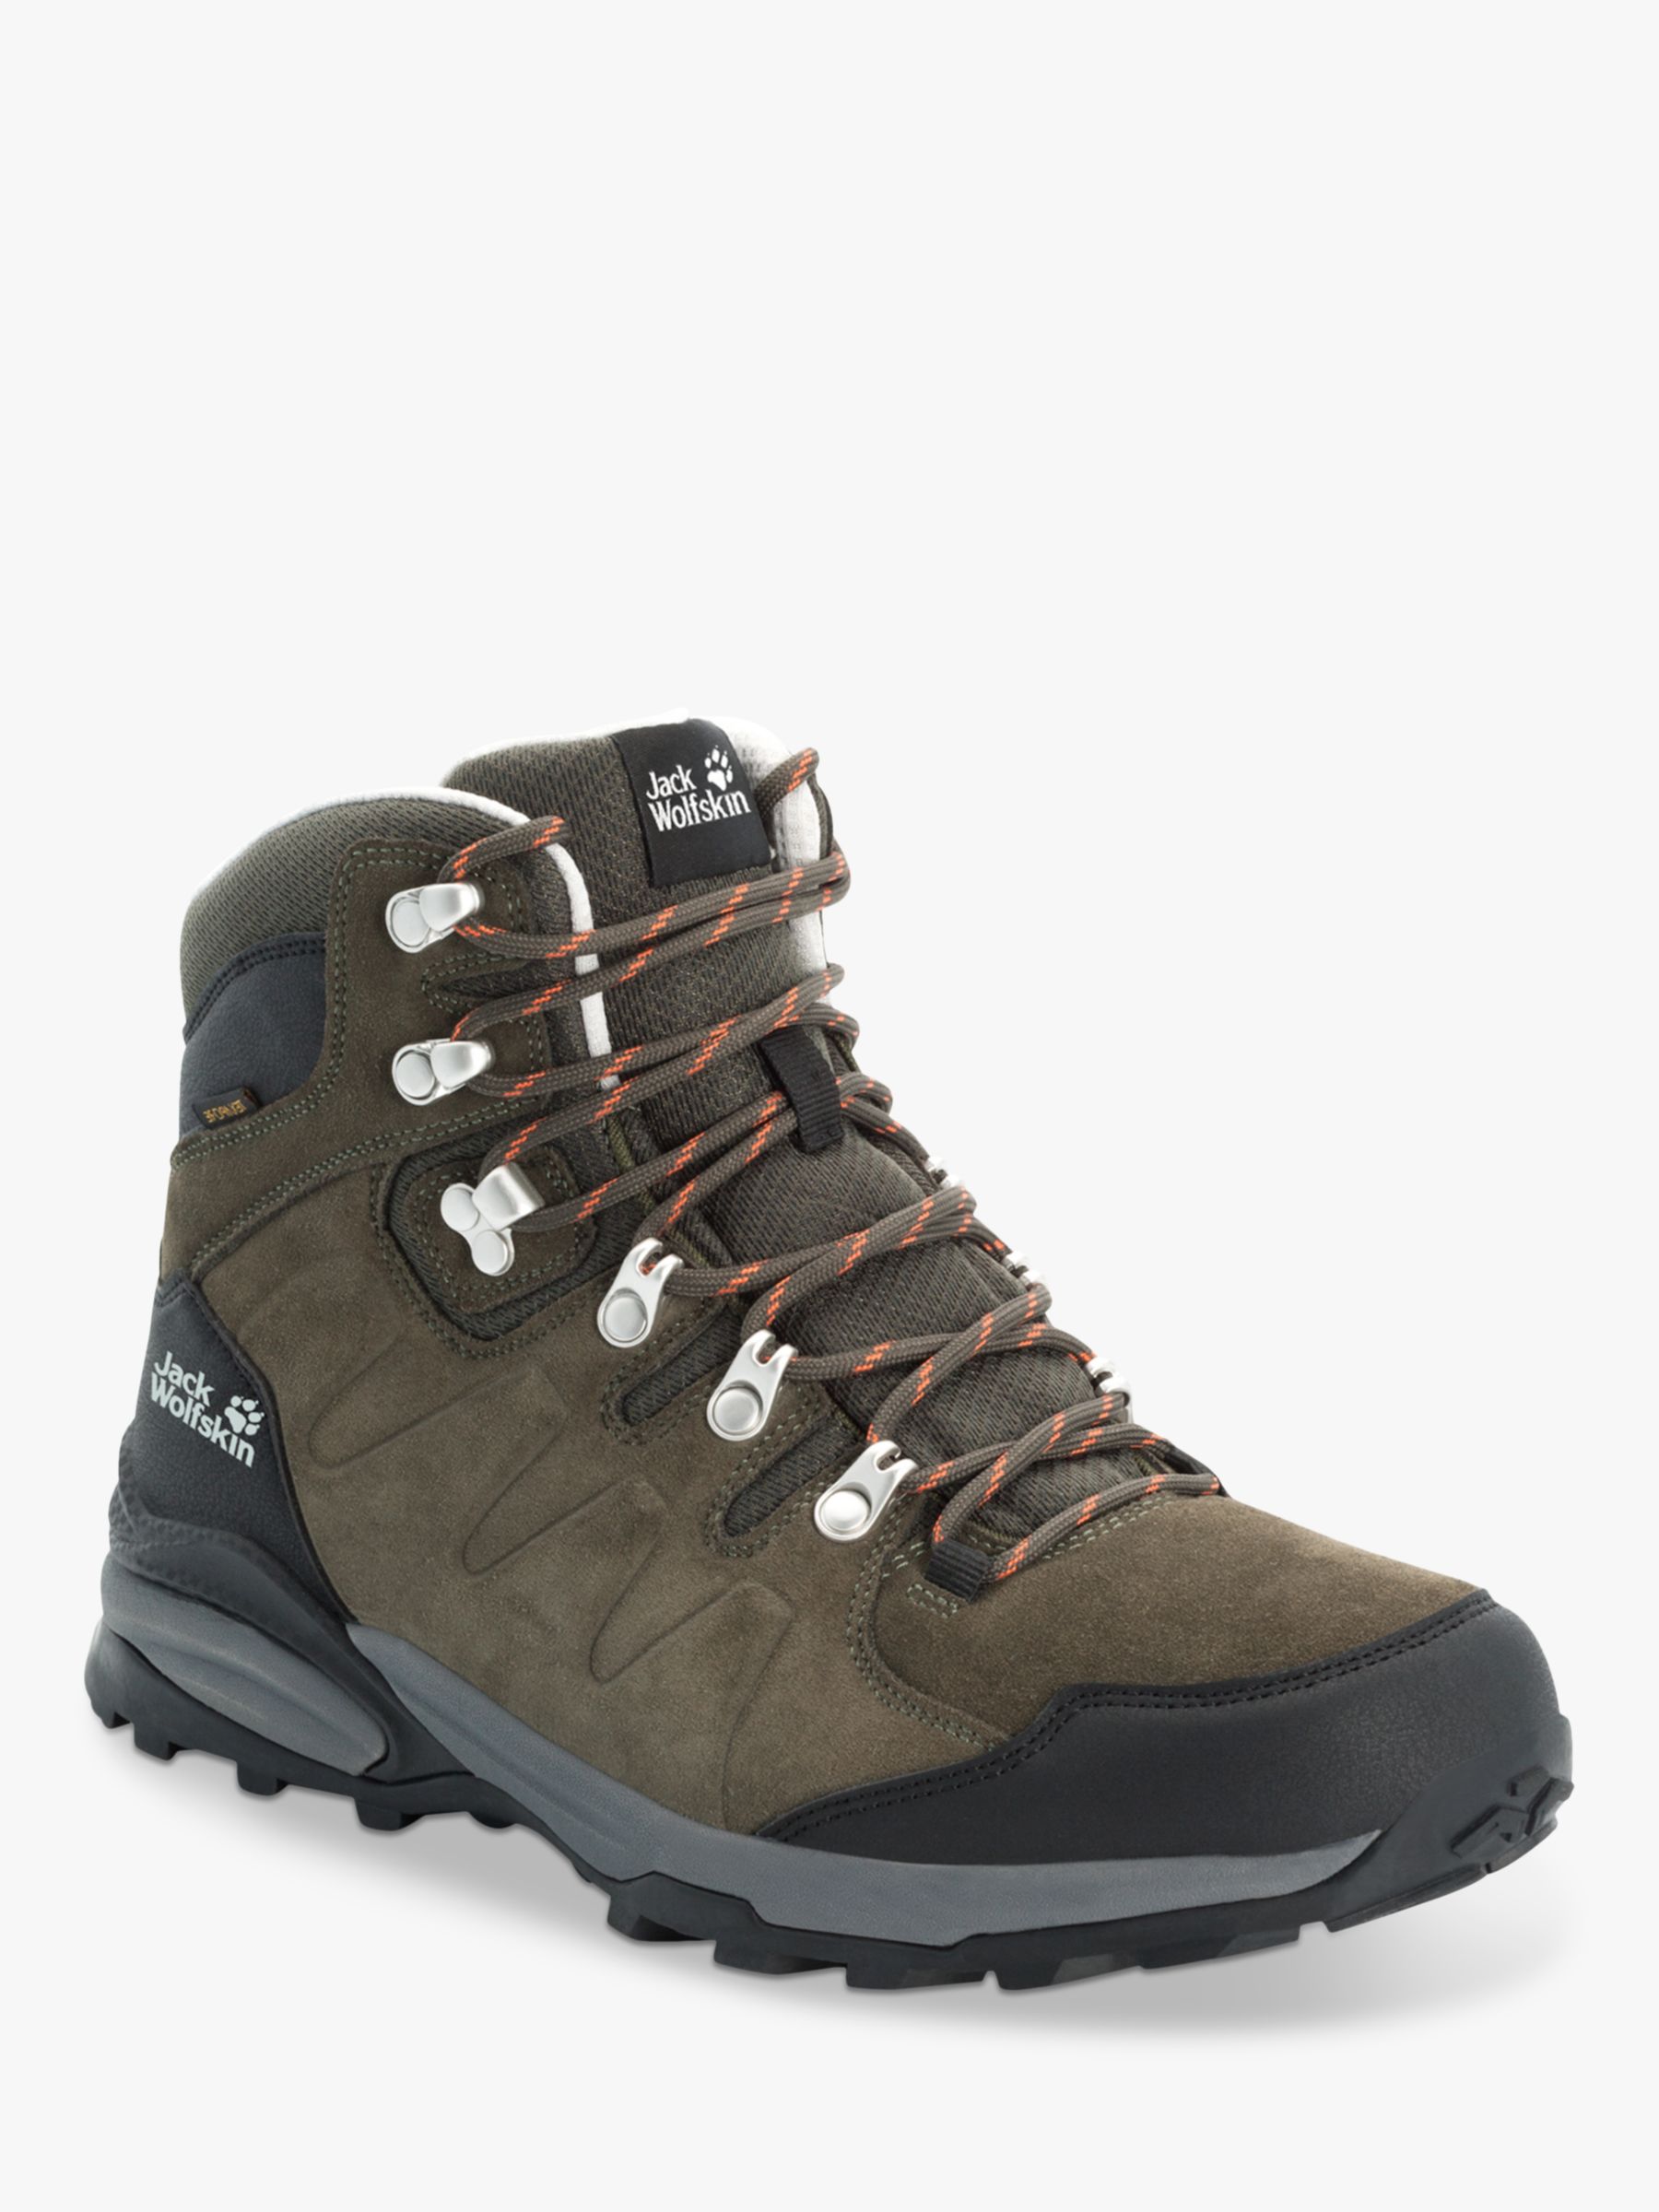 Jack Wolfskin Refugio Texapore Men's Waterproof Walking Boots, Khaki/Phantom, 7